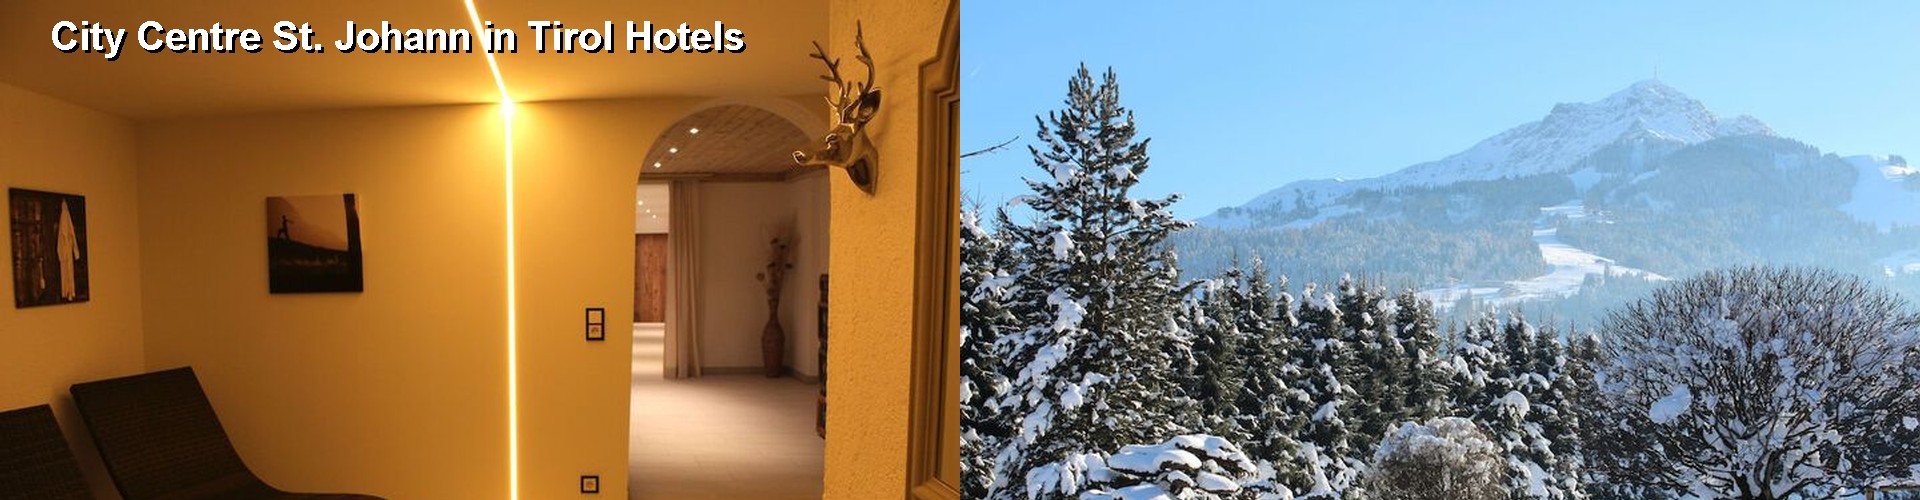 5 Best Hotels near City Centre St. Johann in Tirol